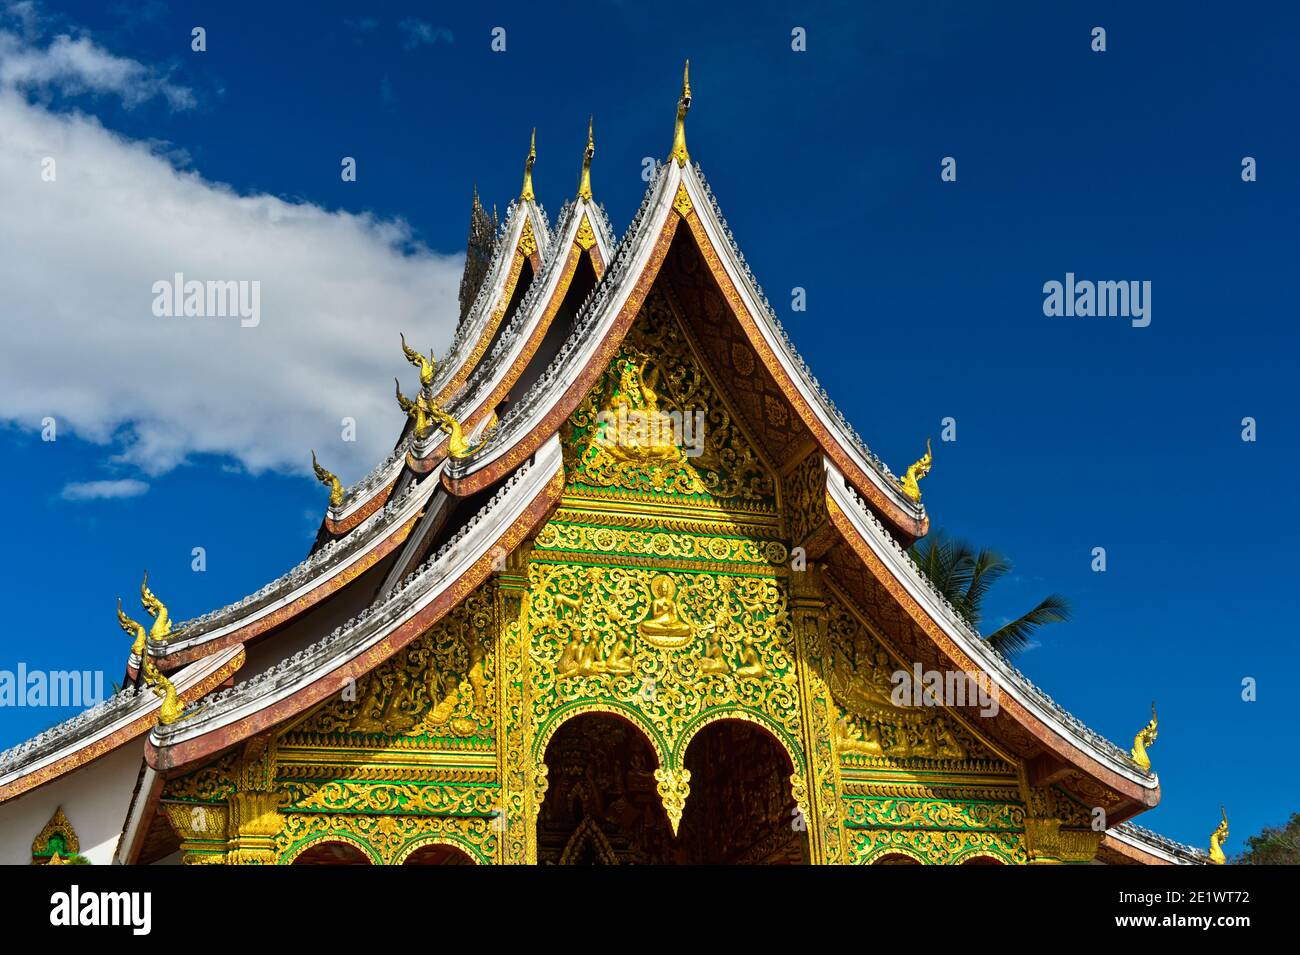 Mehrstufiges Dach im thailändischen Stil, geschmückt mit stilisierten Naga-Finials an den Enden des Daches, Haw Pha Bang Tempel, Luang Prabang, Laos Stockfoto